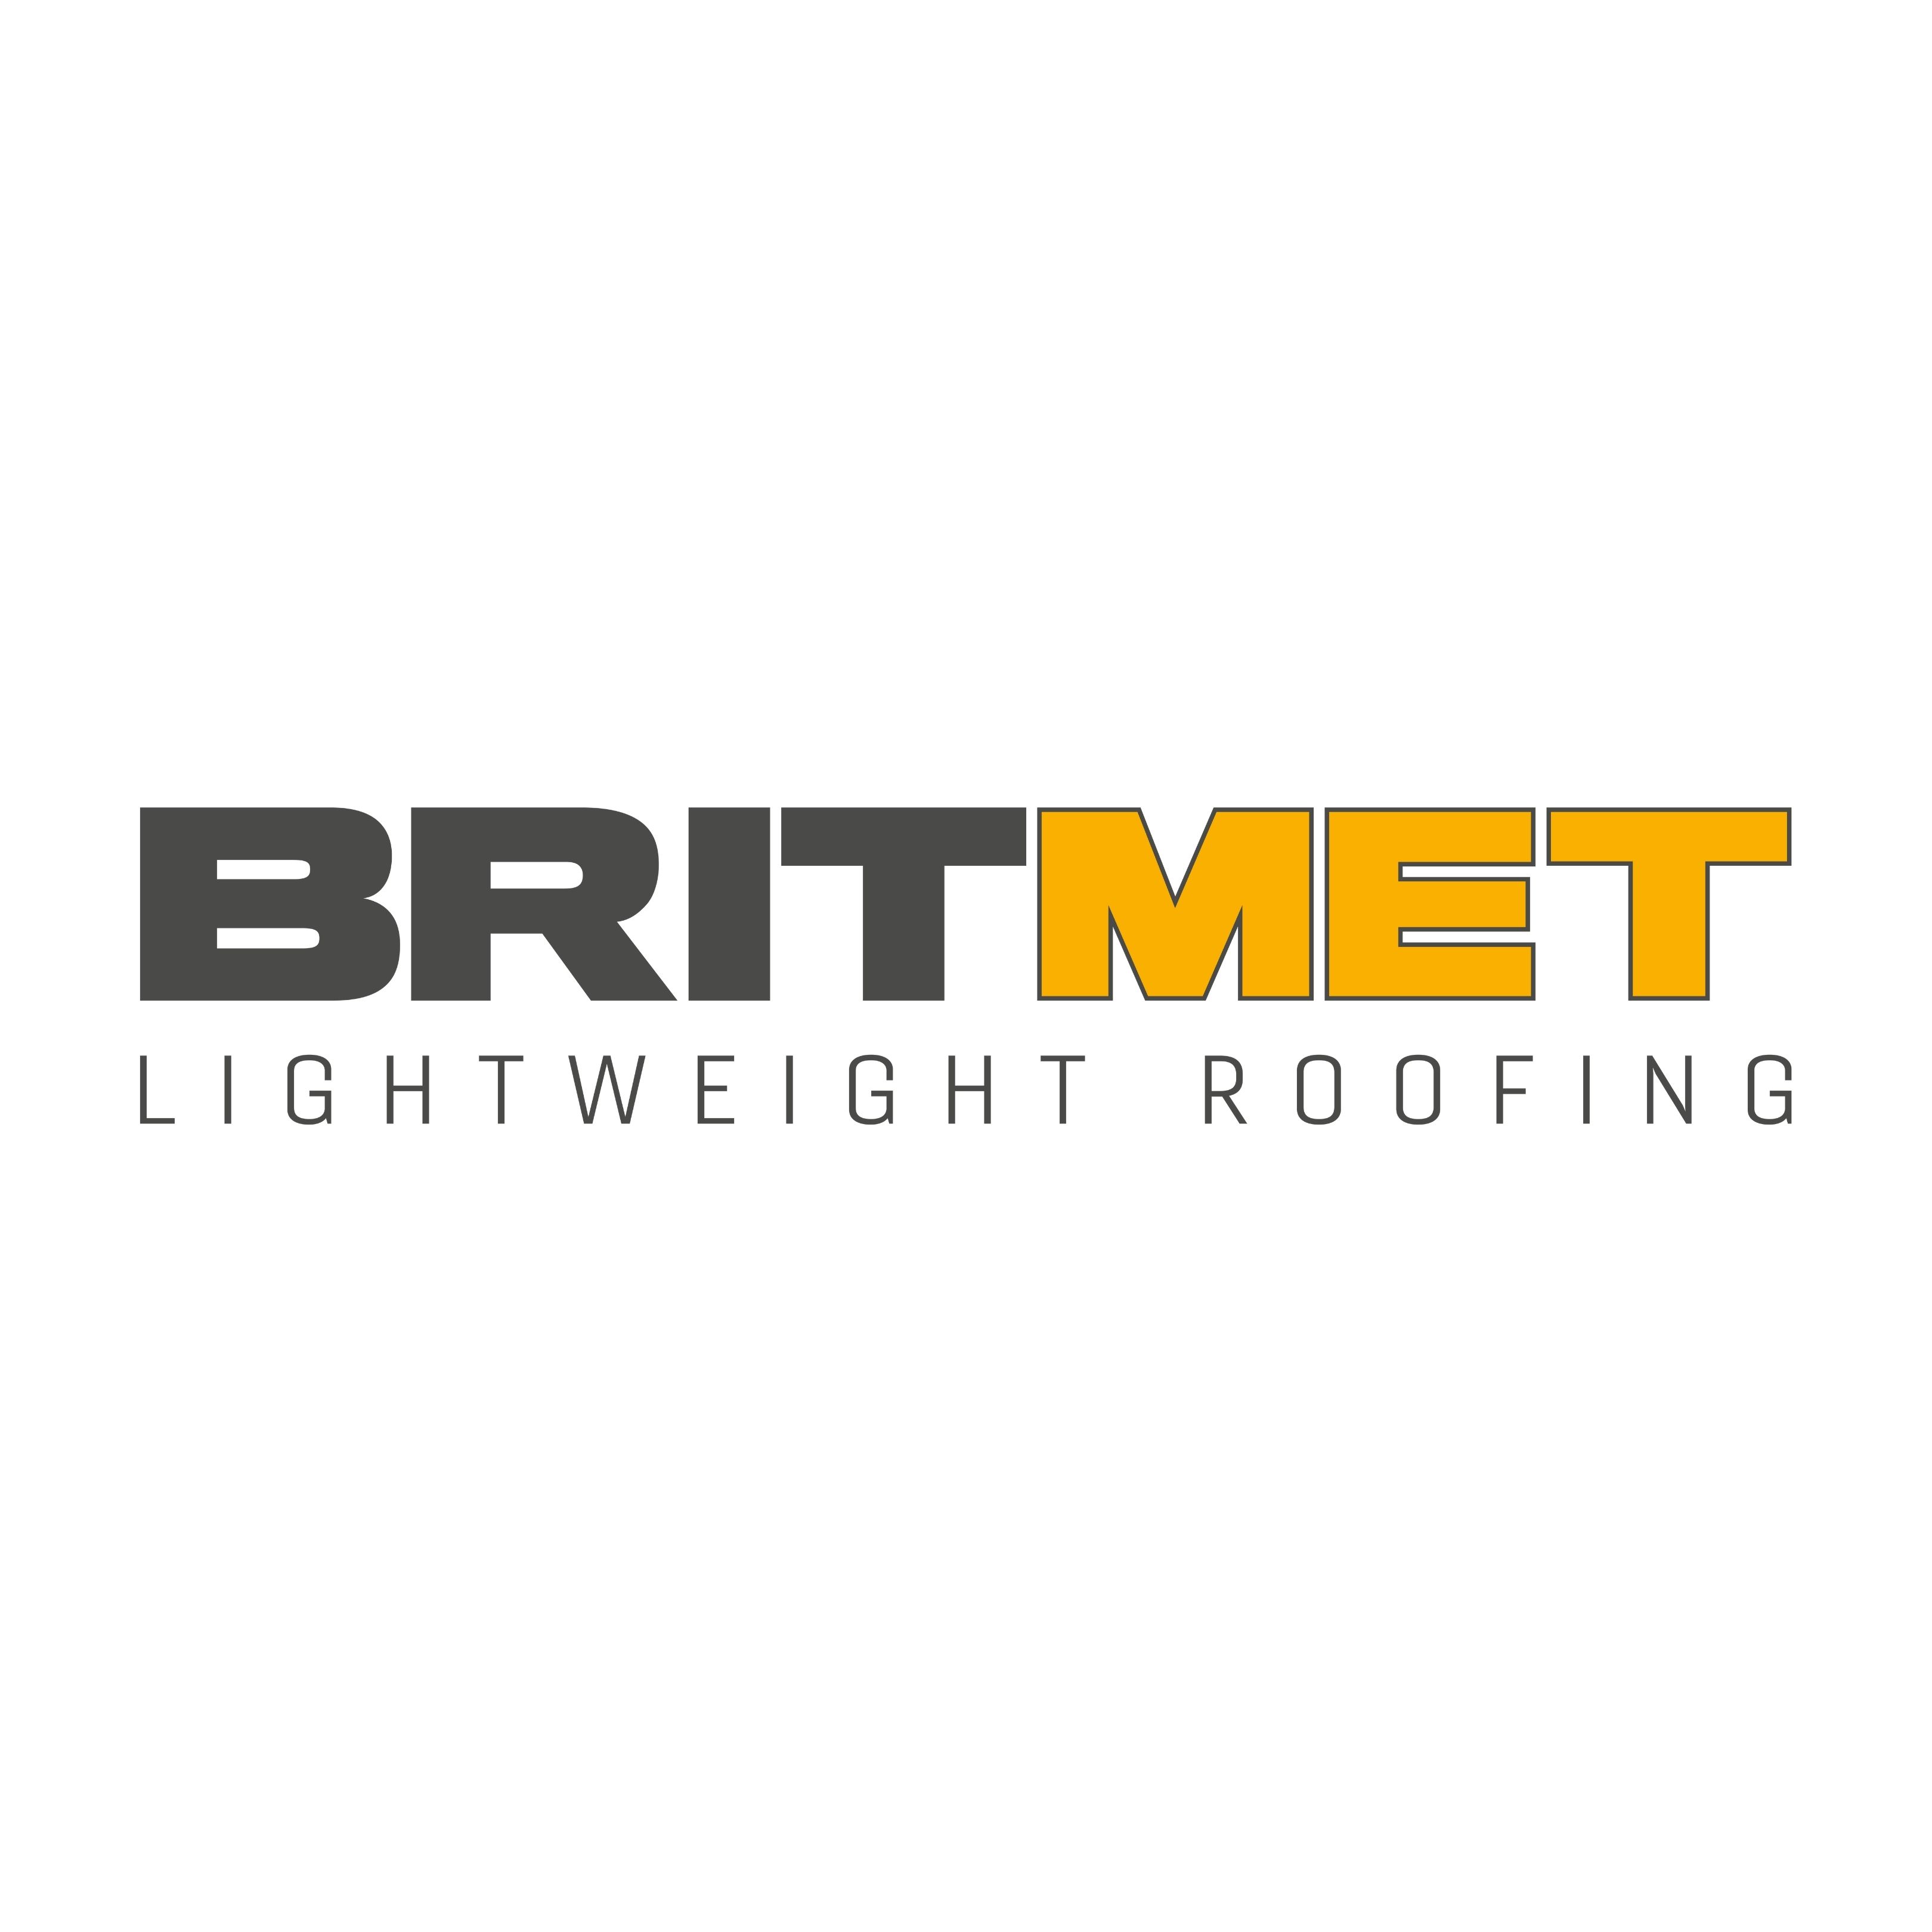 Britmet Lightweight Roofing